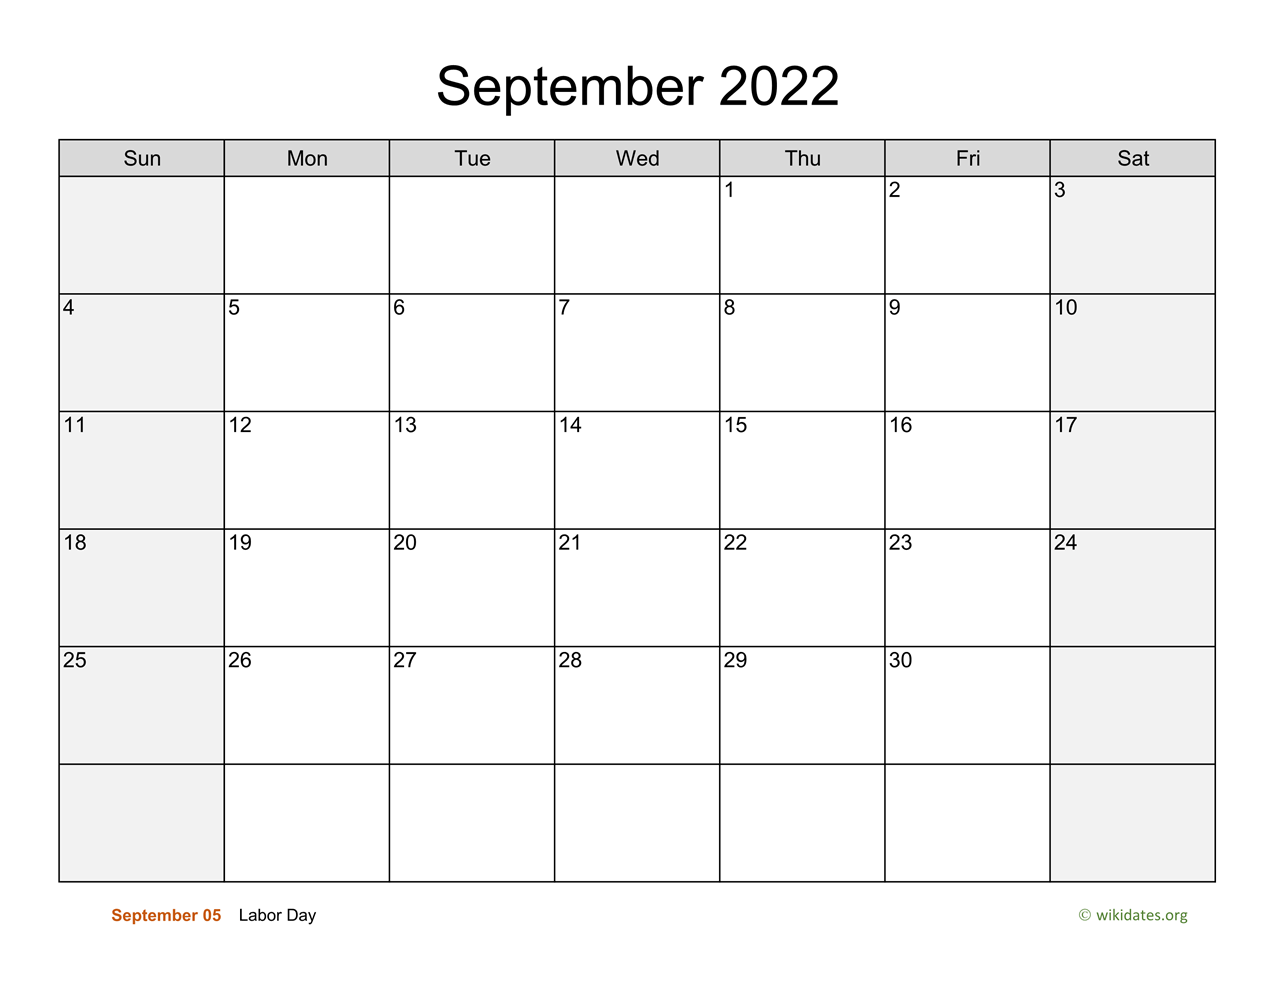 Labor Day Weekend 2022 Calendar September 2022 Calendar With Weekend Shaded | Wikidates.org